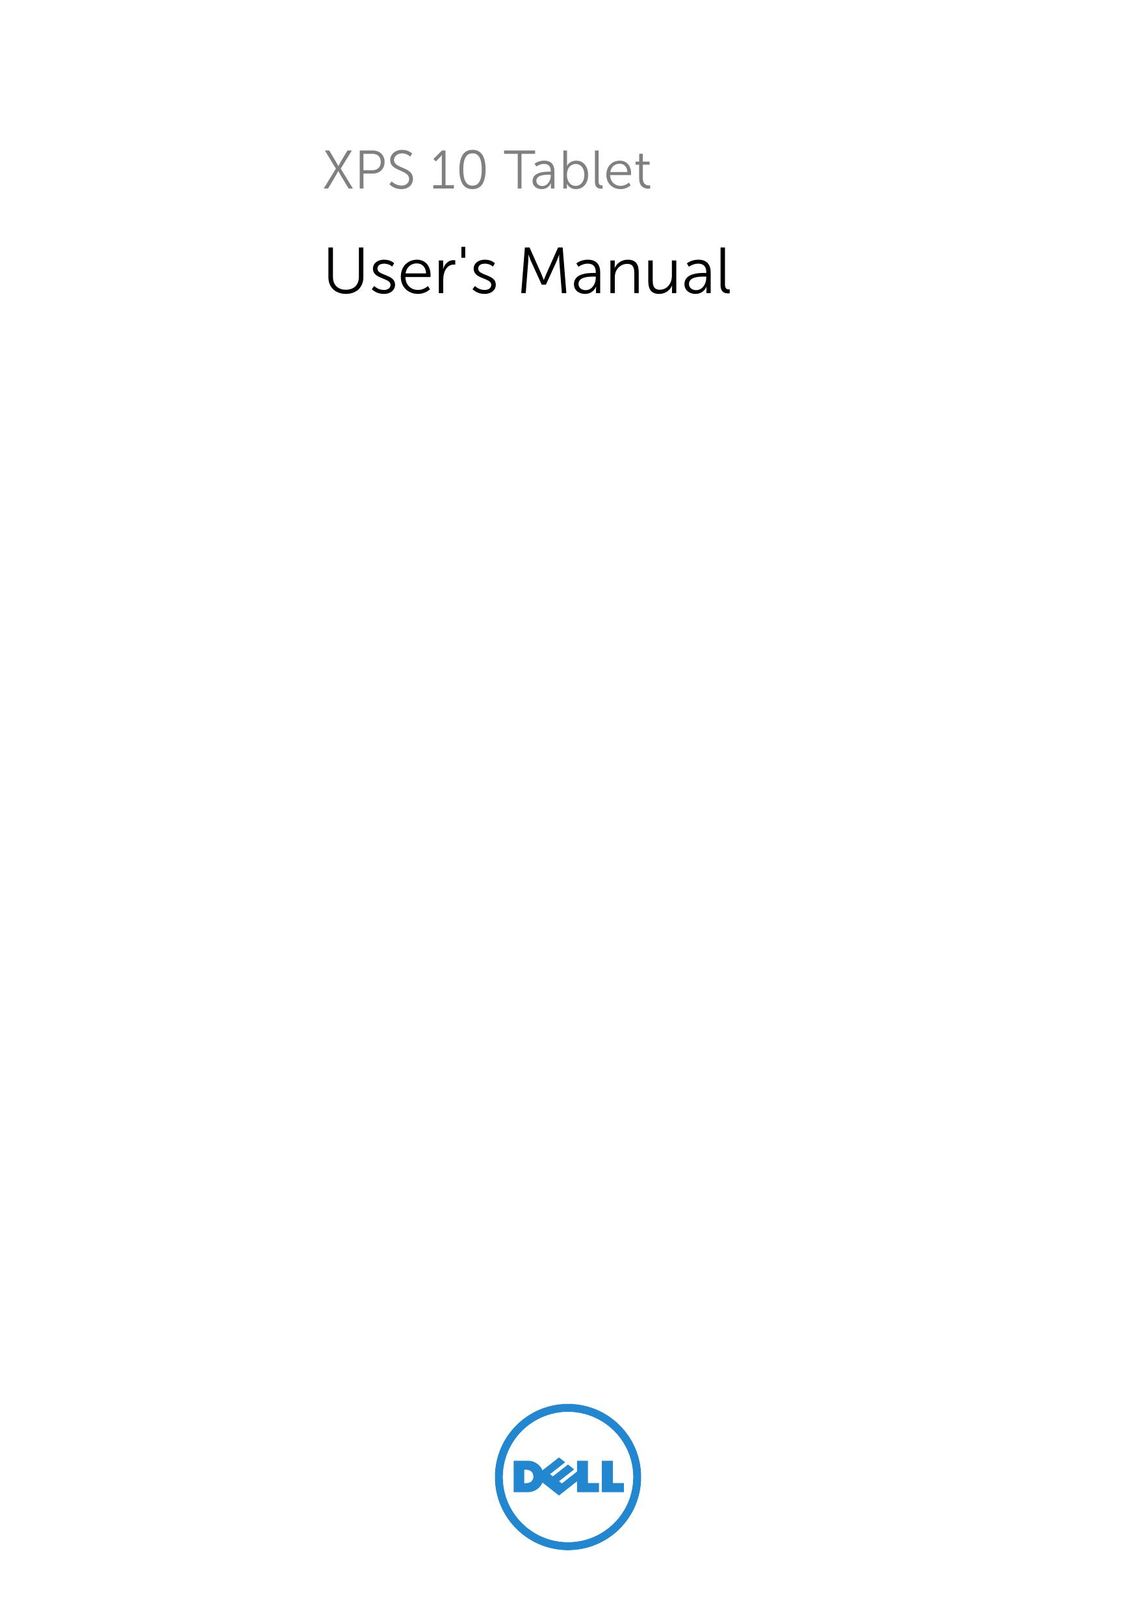 Dell XPS 10 Tablet User Manual